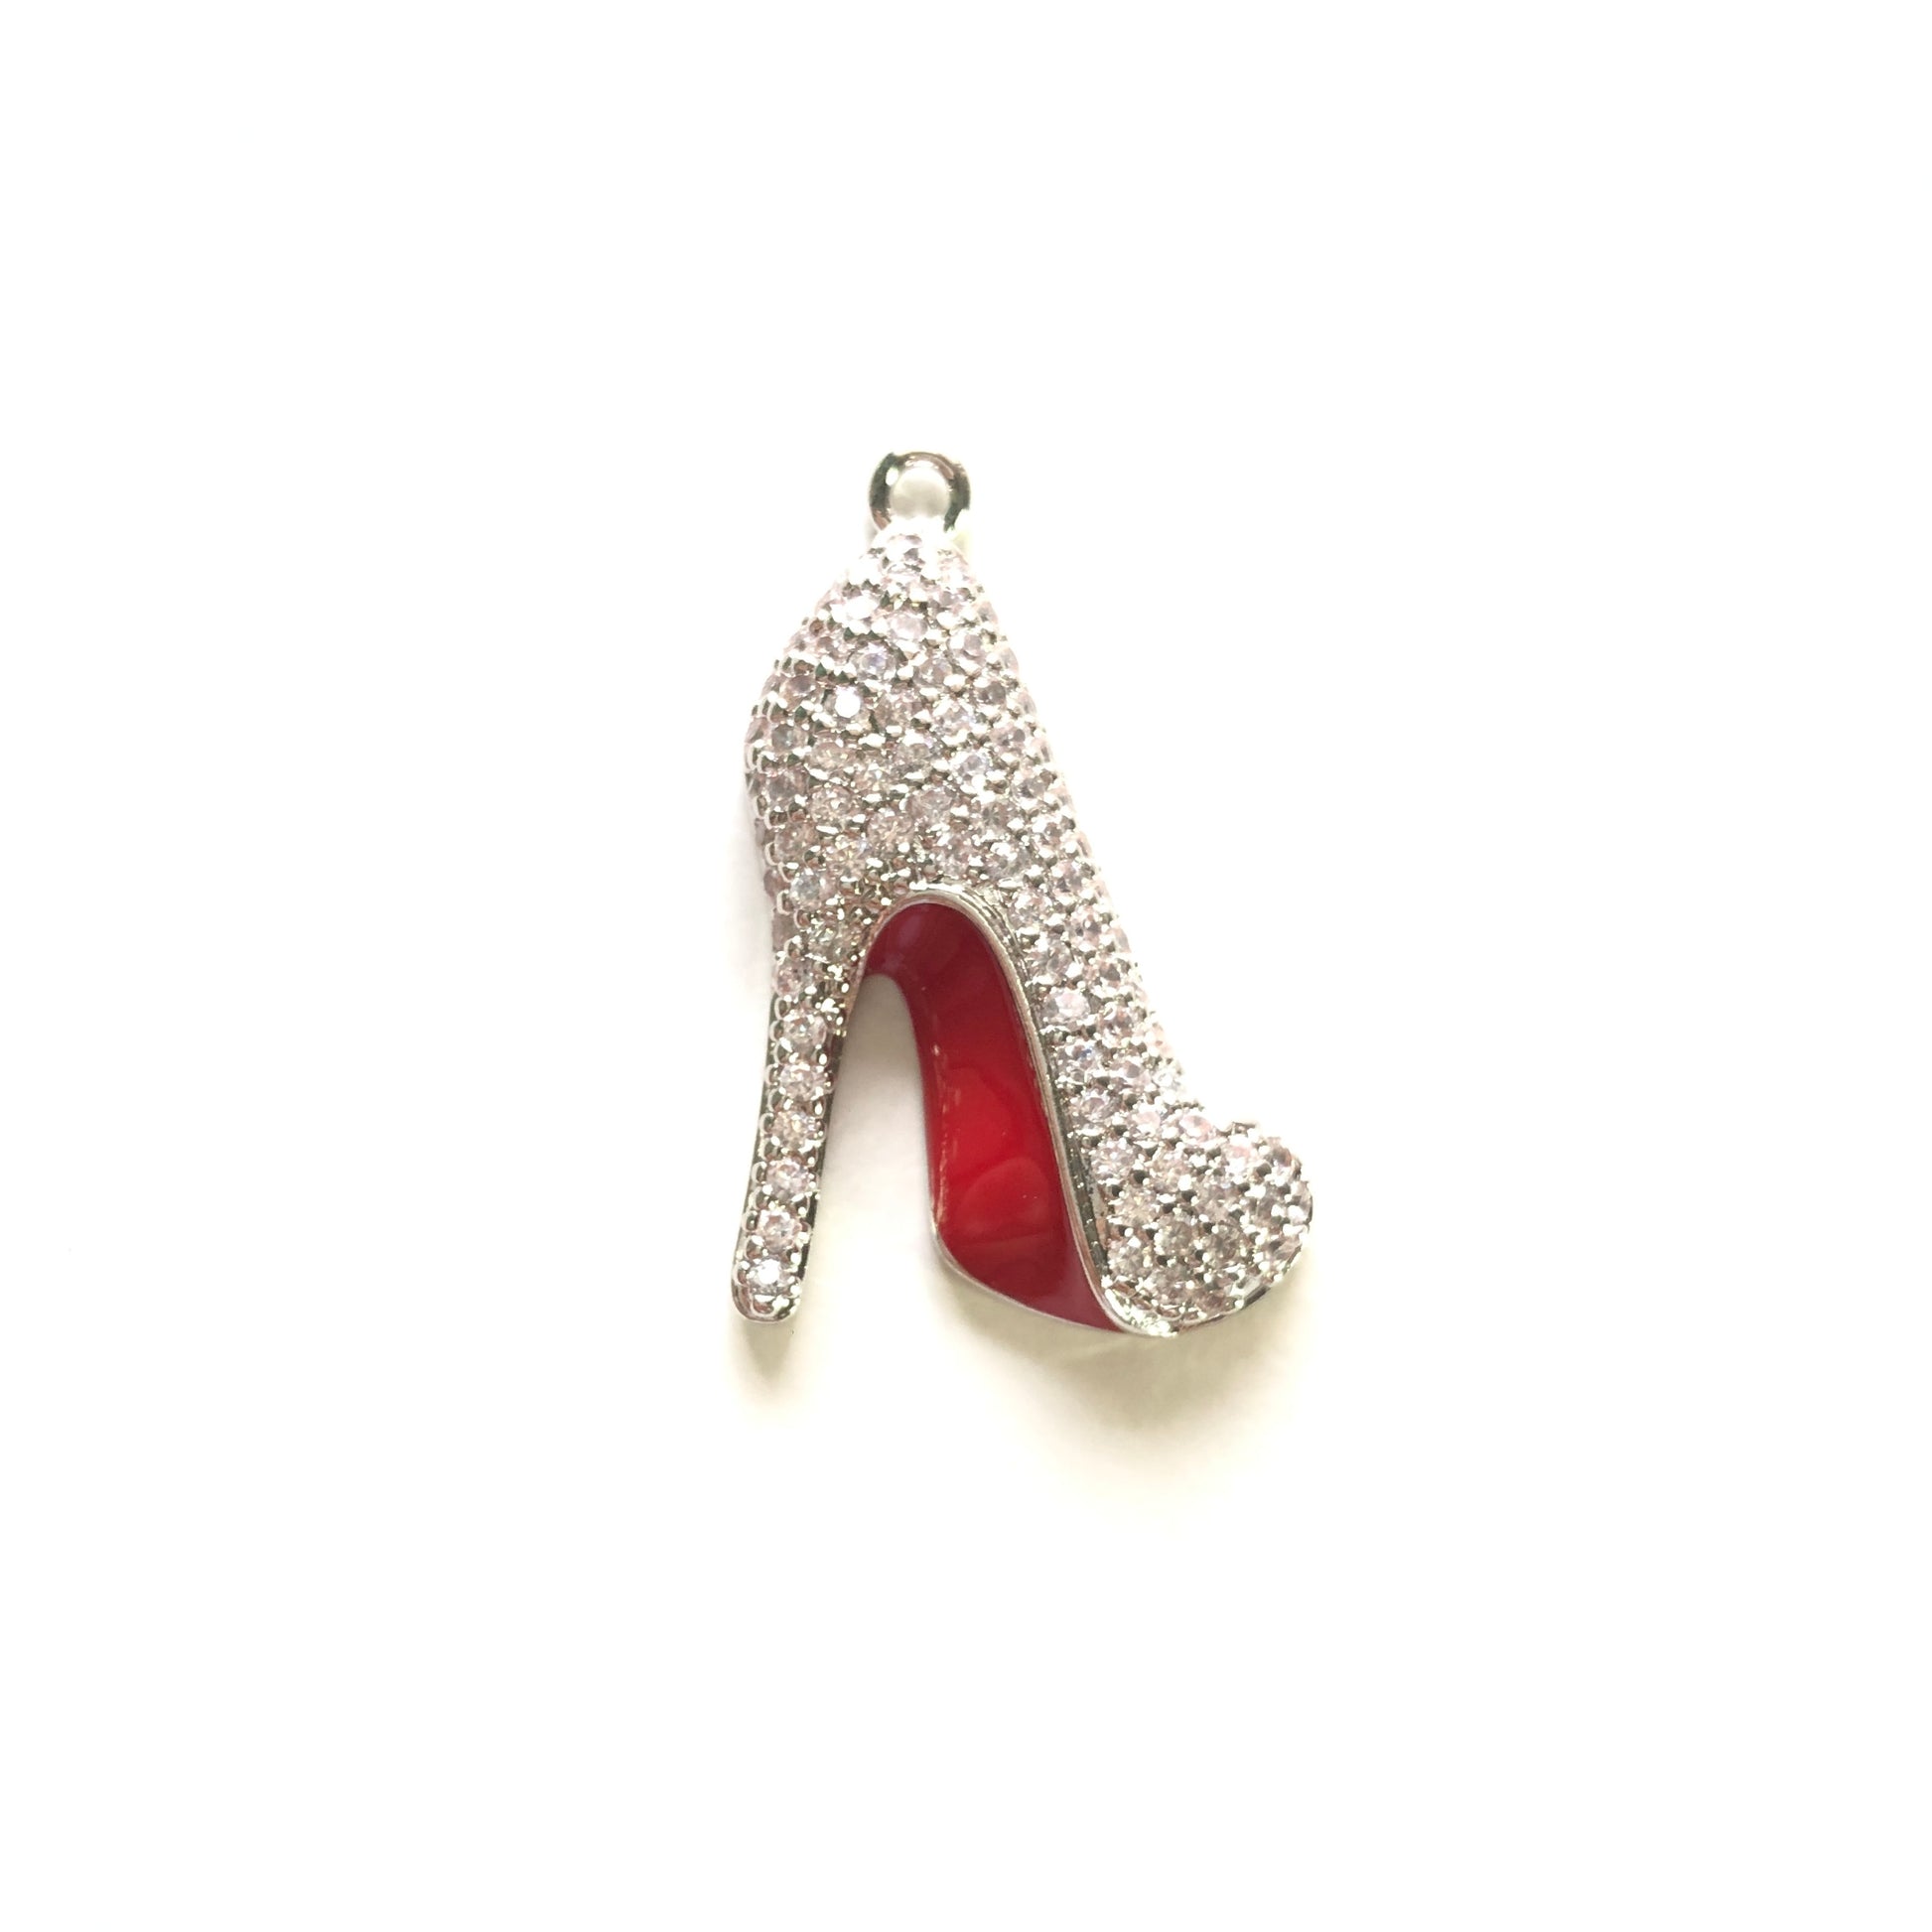 10pcs/lot 30.3*22.5mm CZ Paved Red Bottom High Heel Shoe Charms Silver CZ Paved Charms High Heels Charms Beads Beyond